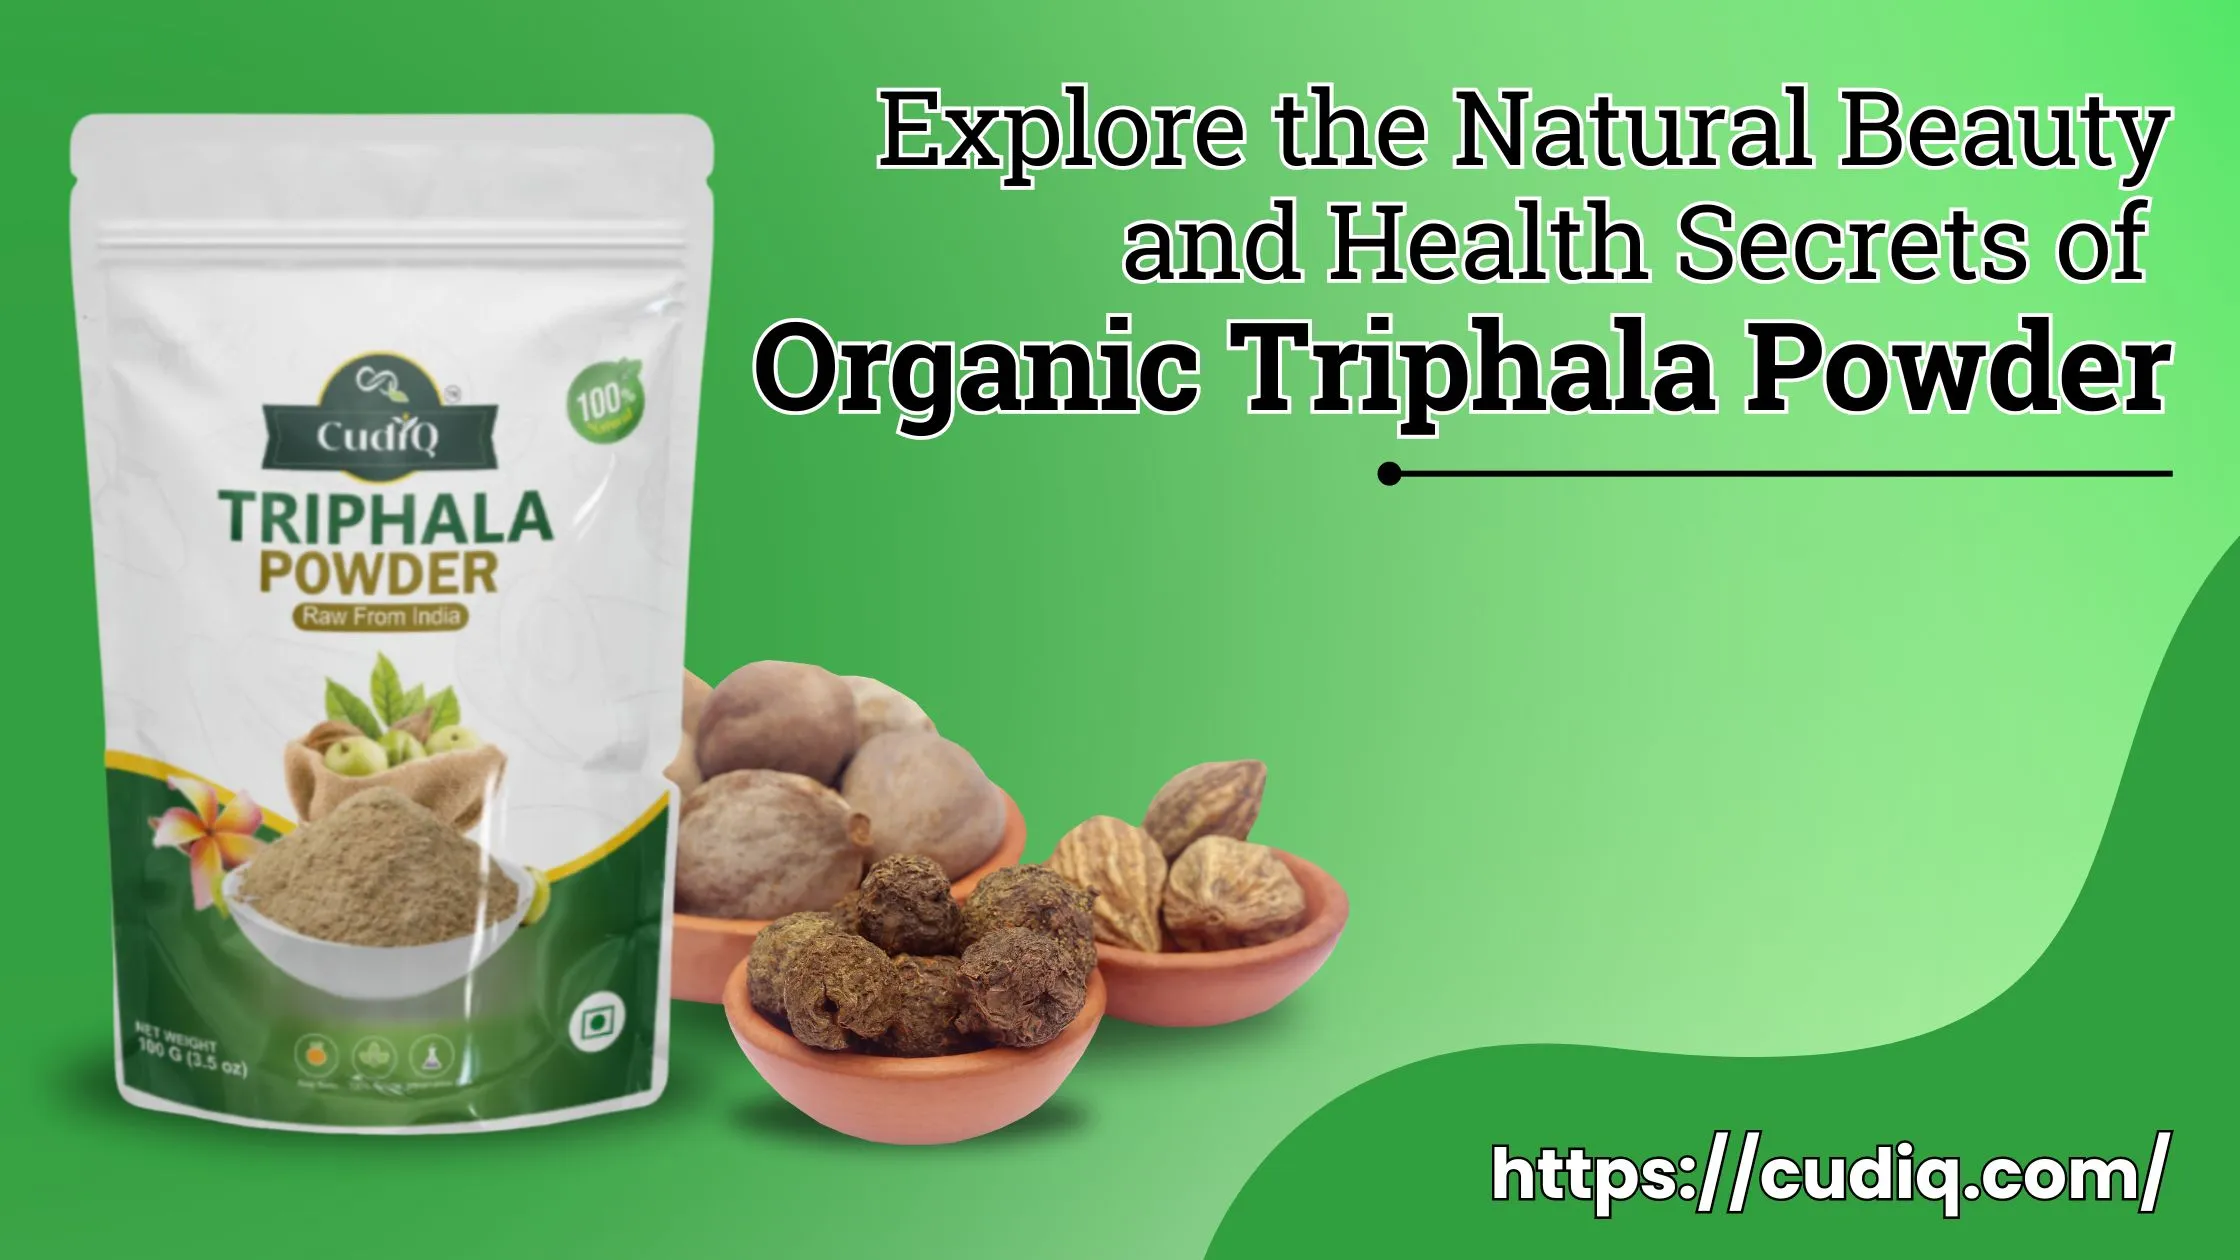 Explore the Natural Beauty and Health Secret of Organic Triphala Powder!